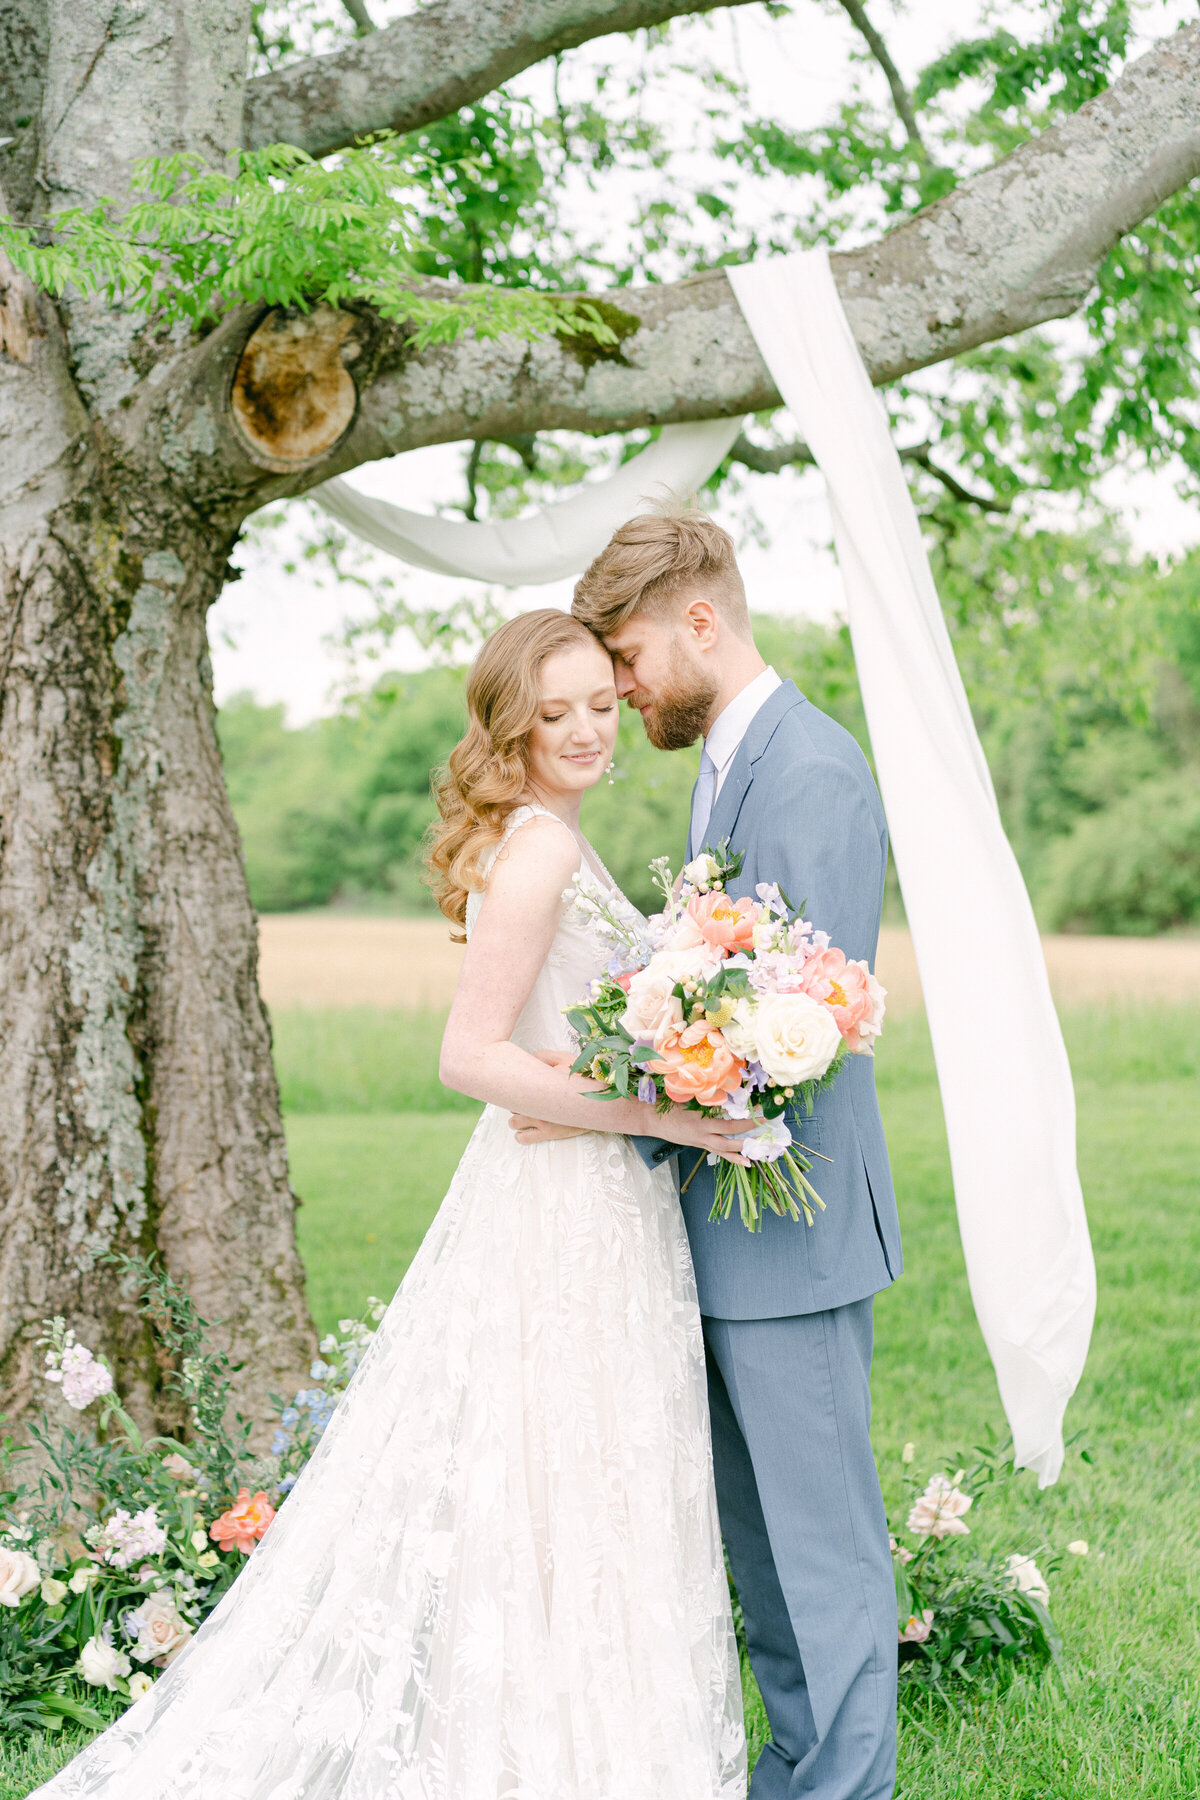 Ava-Vienneau-Nashville-Wedding-Photographer-Southall-Meadows-70